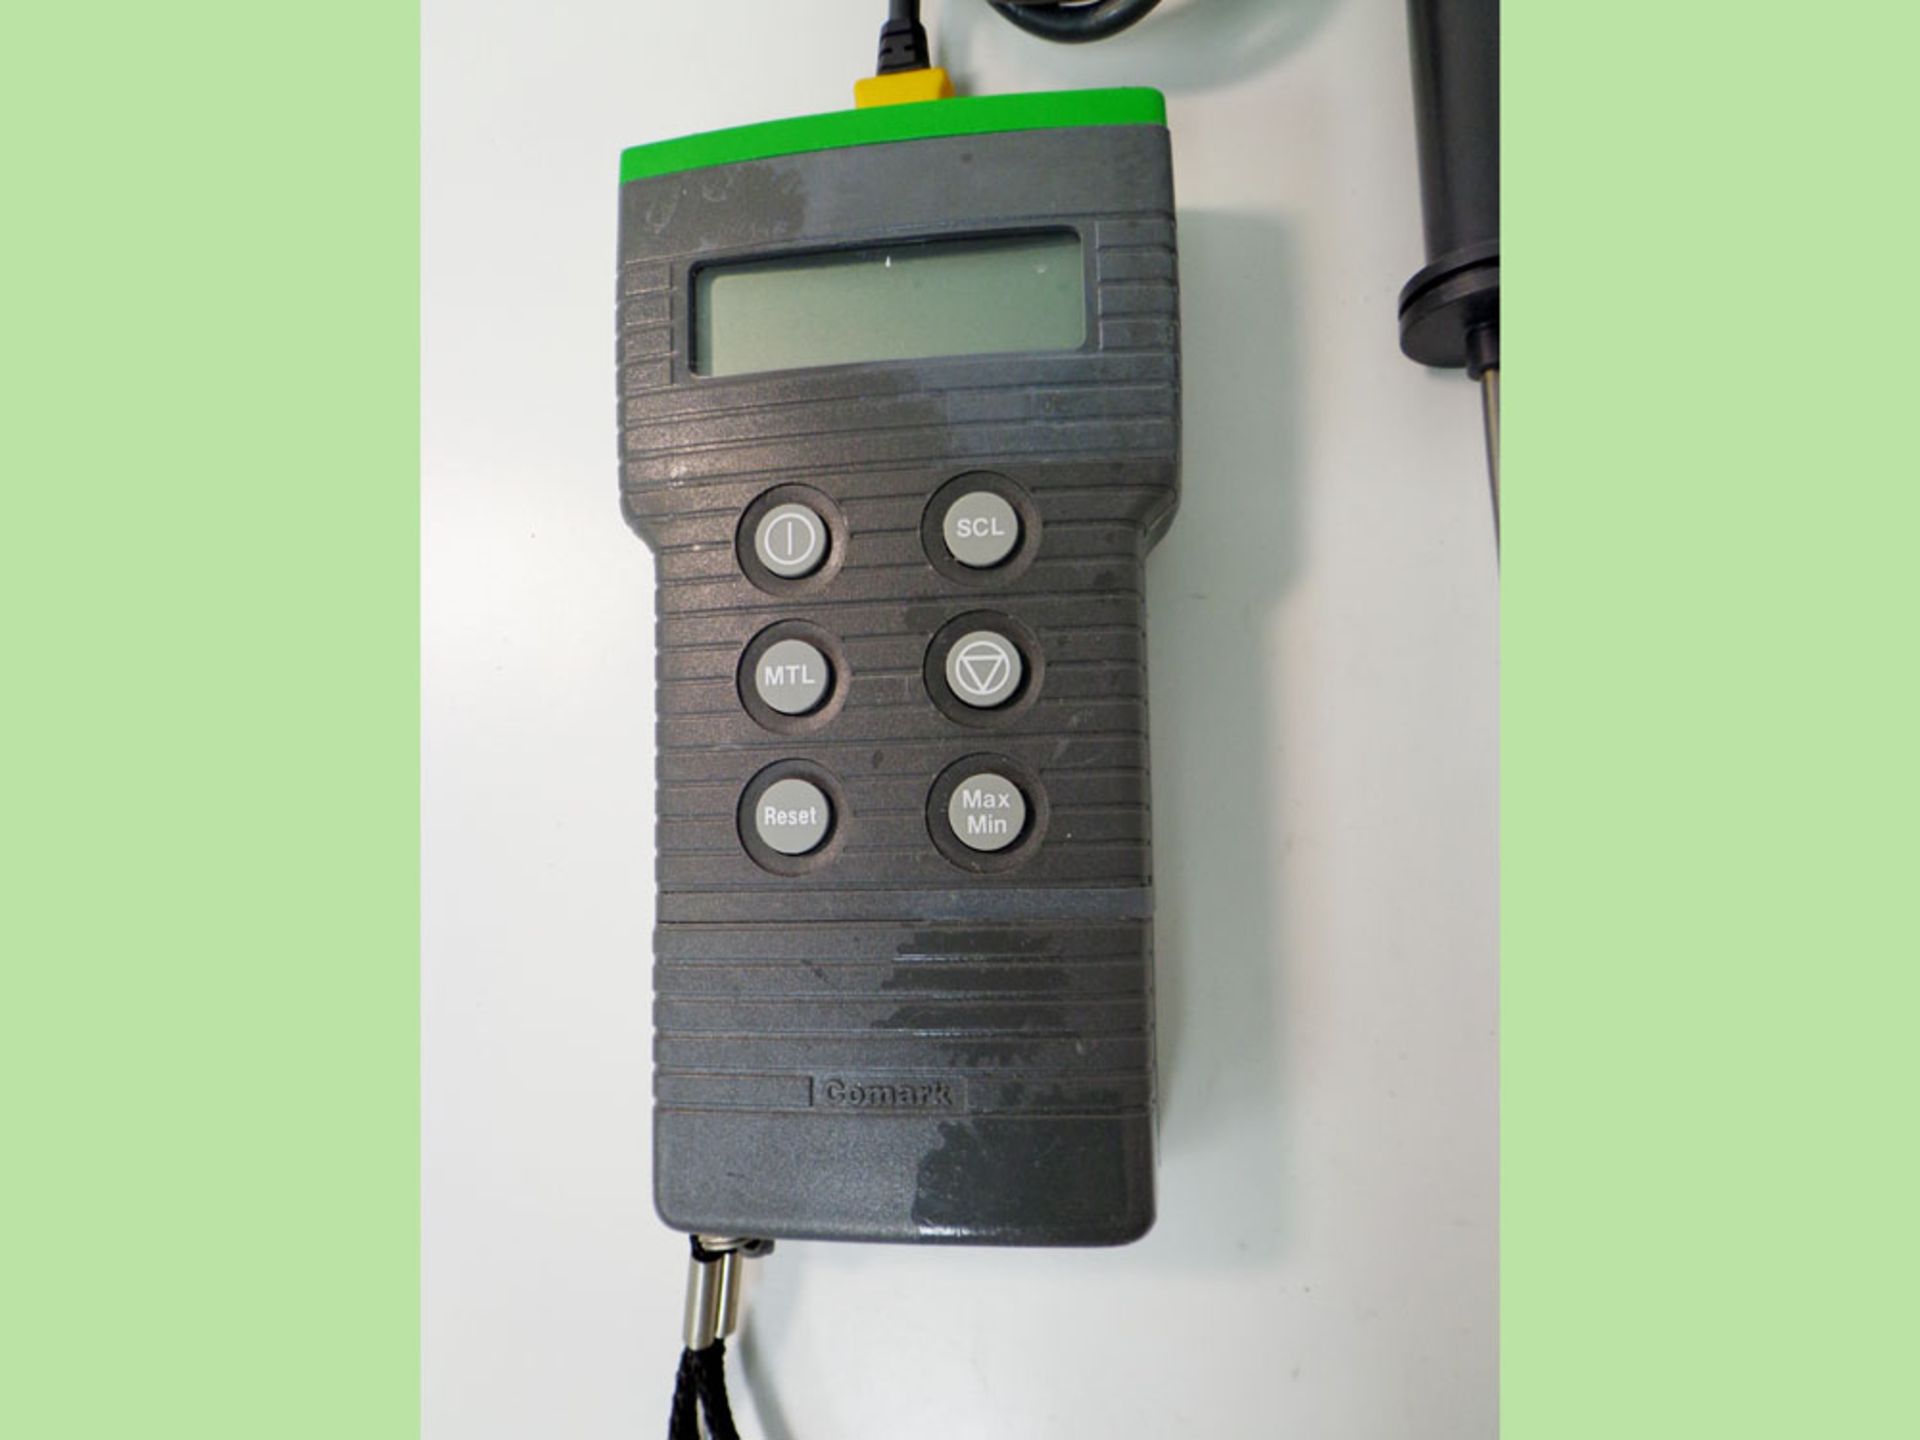 Comark C9006 I.S. Handheld Digital Thermometer, 1 Input, C900X series, S/N 59828/16-04 - Image 2 of 3